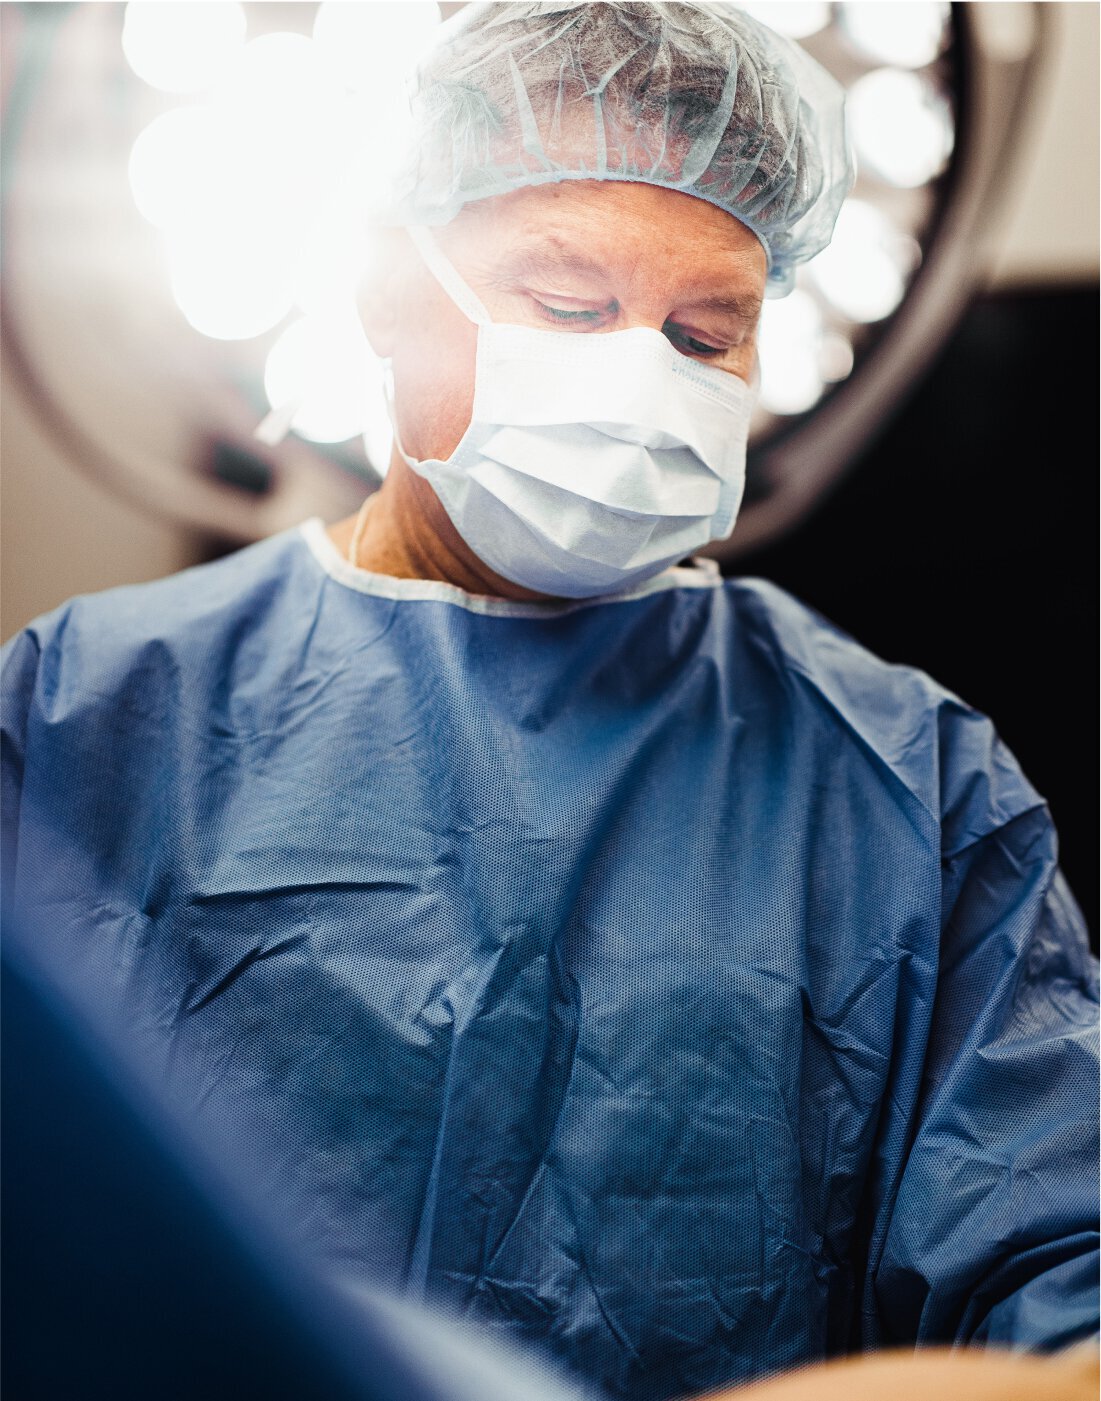 Gynecomastia surgeon performing surgery